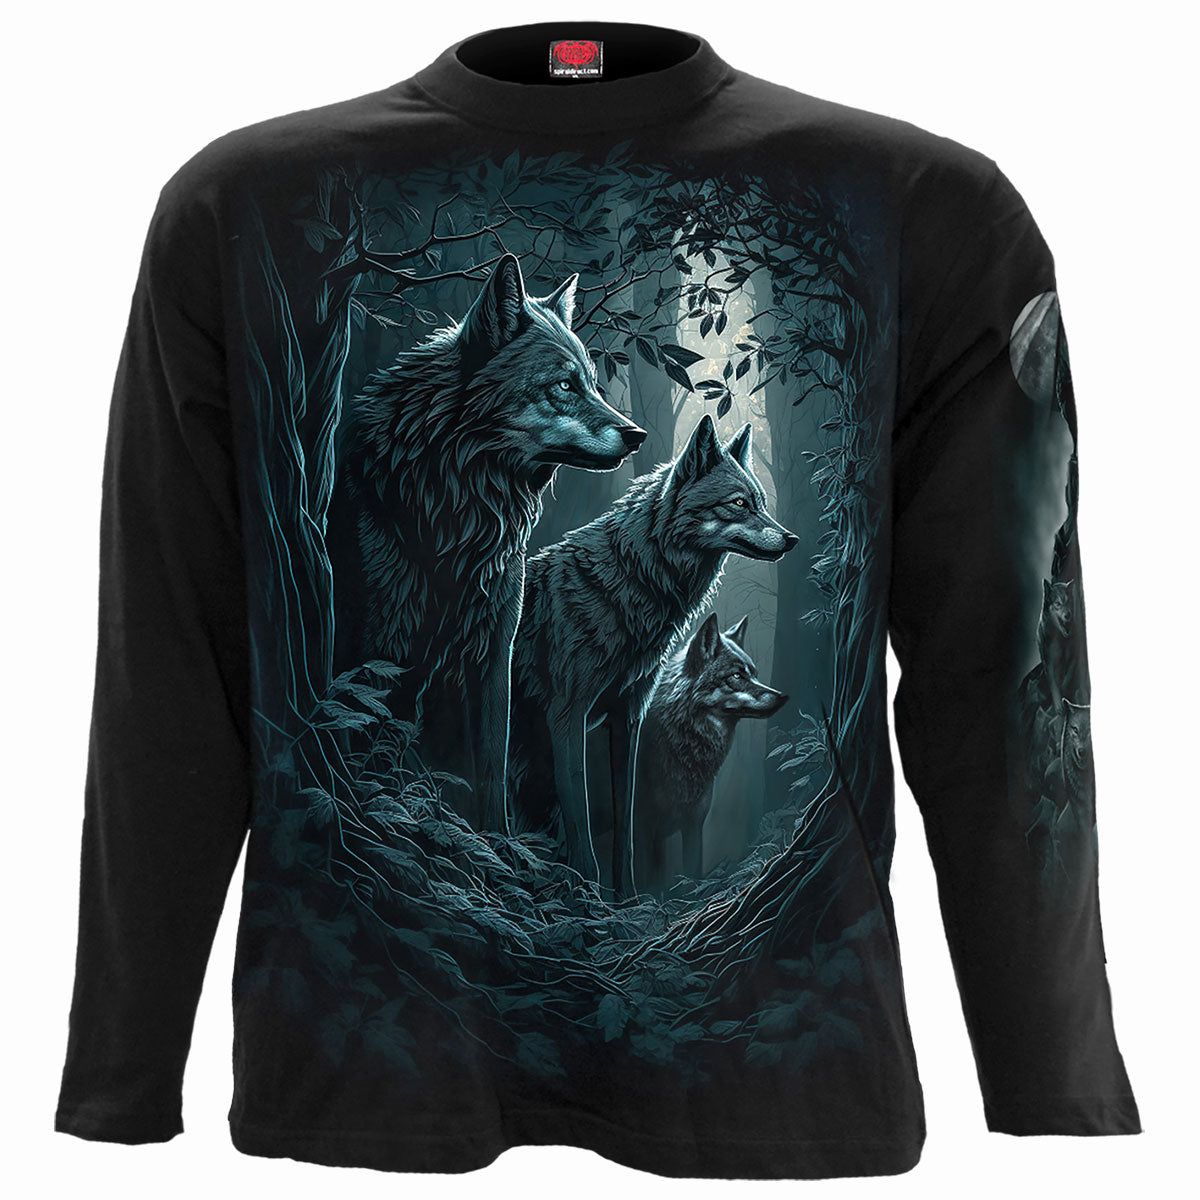 FOREST GUARDIANS - Longsleeve T-Shirt Black